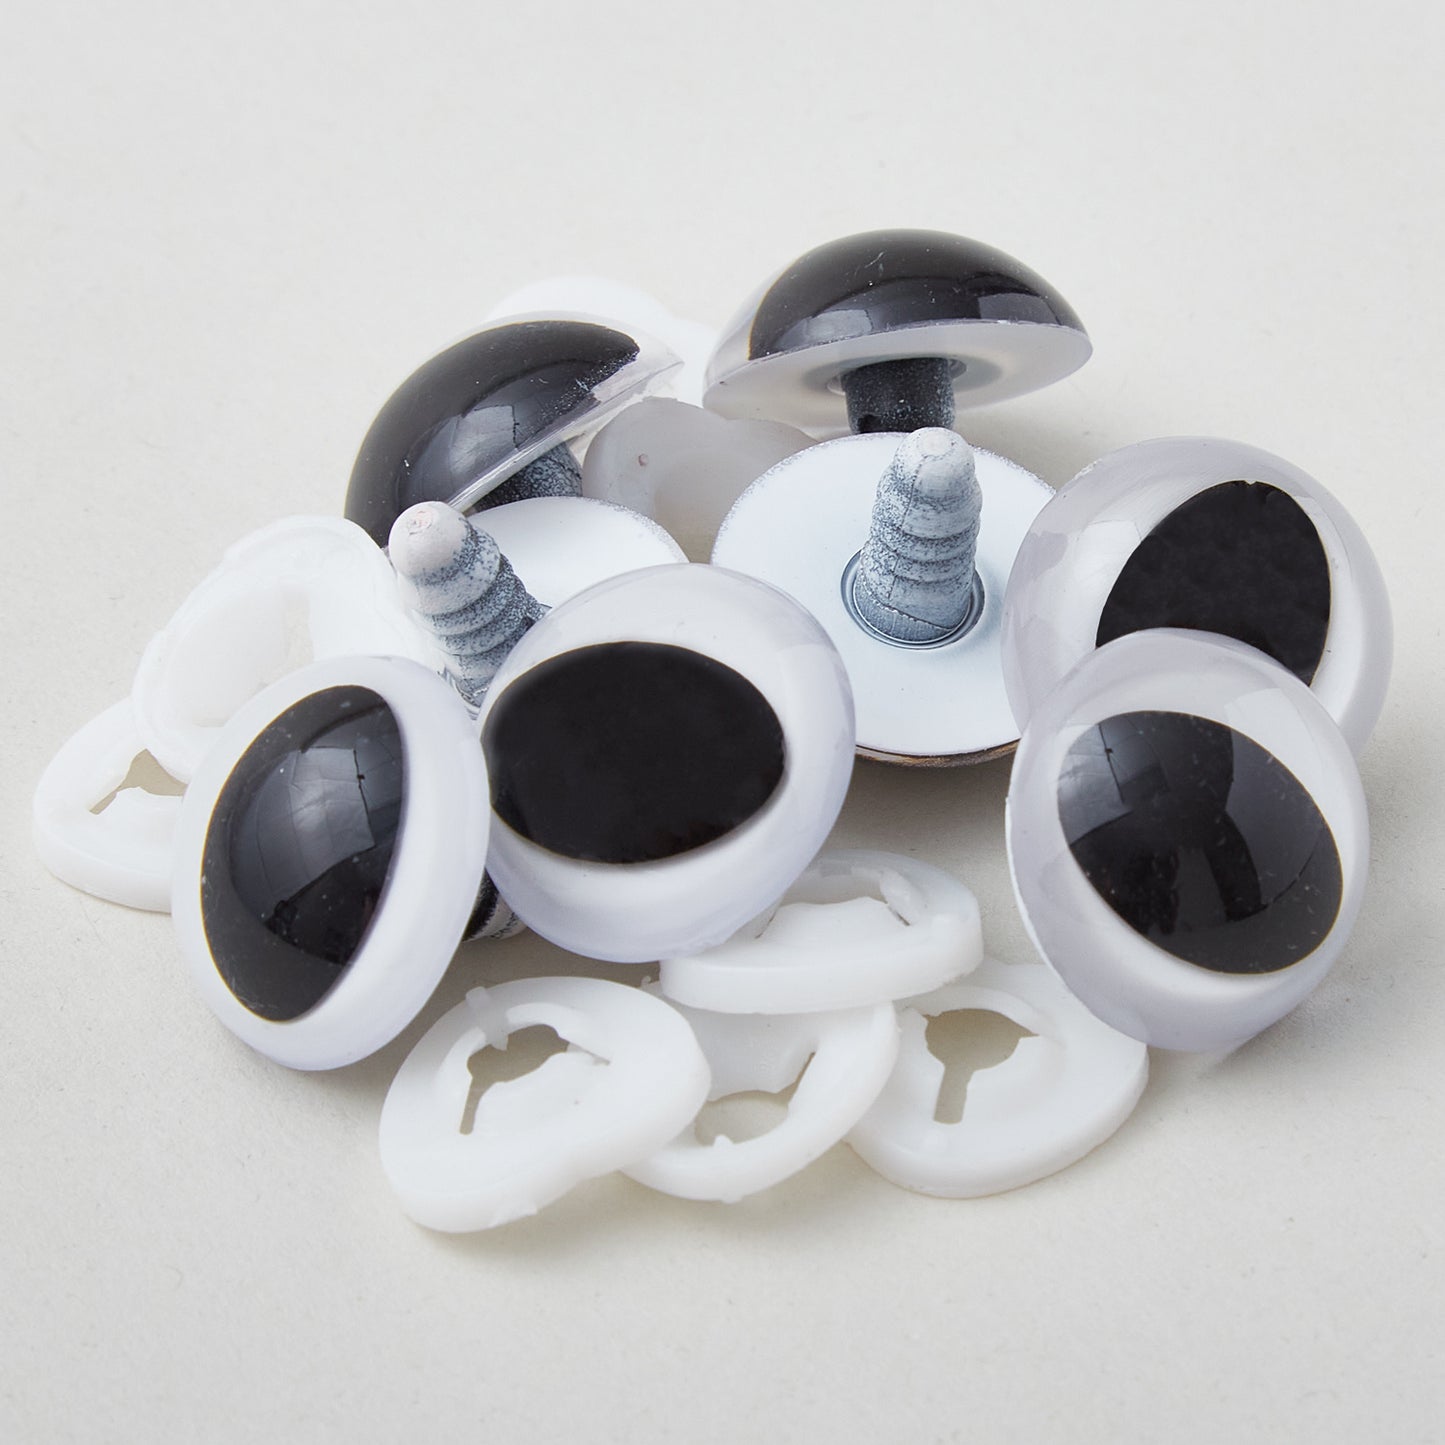 Plastic Slit Pupil Safety Eyes - 21mm White - 4 Pairs Primary Image